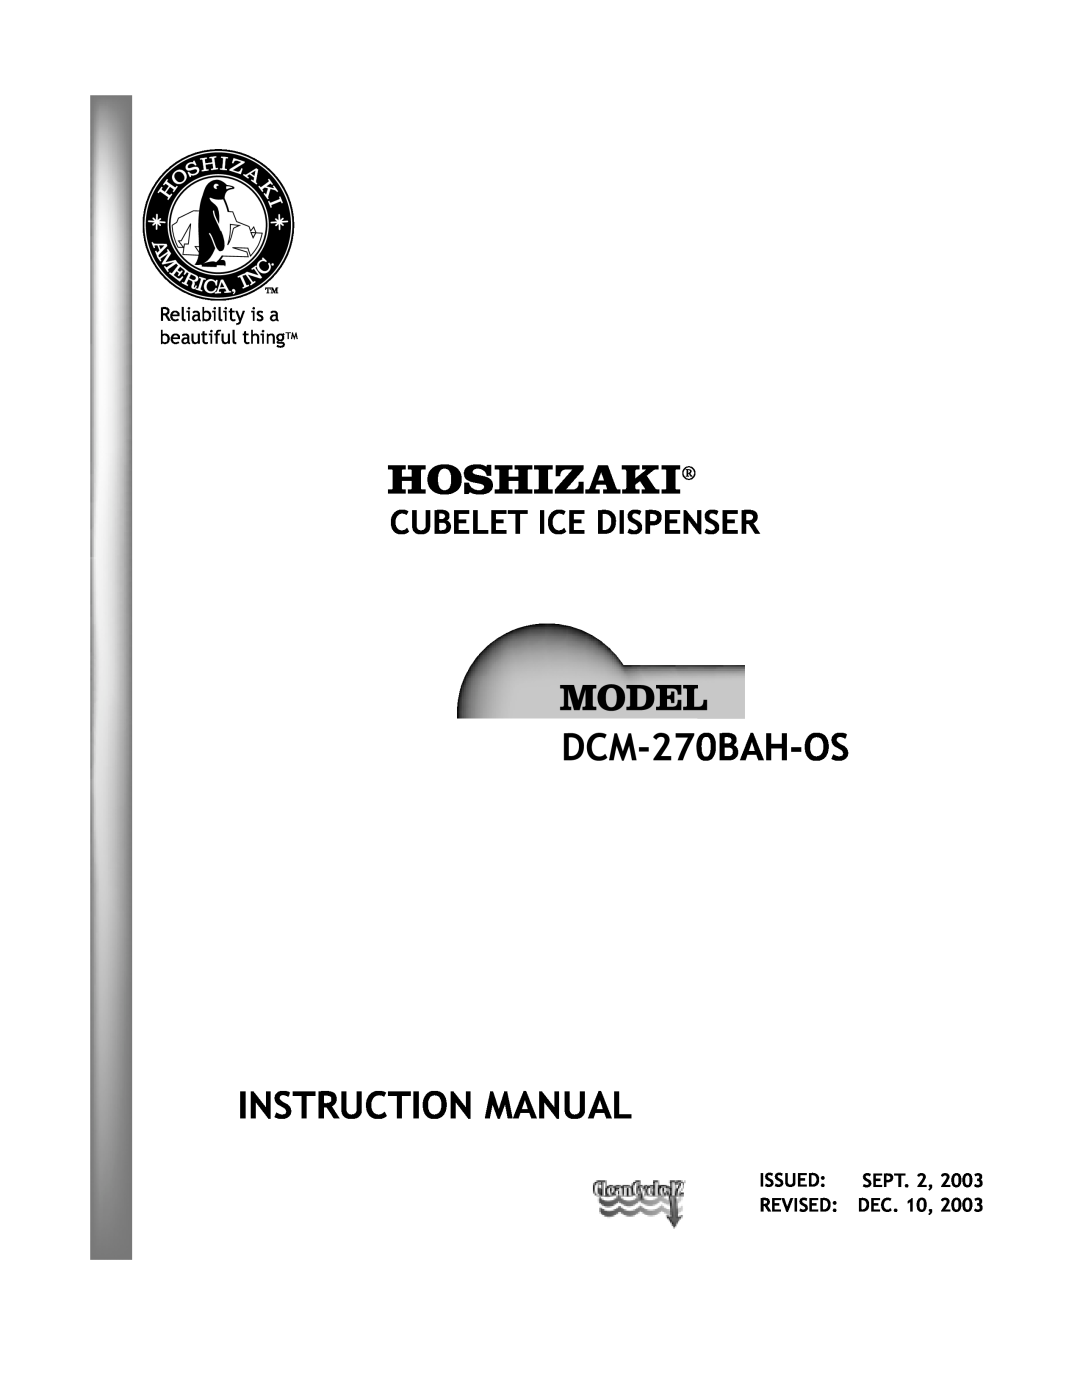 Hoshizaki DCM-270BAH-OS instruction manual Cubelet Ice Dispenser, Reliability is a beautiful thingTM 